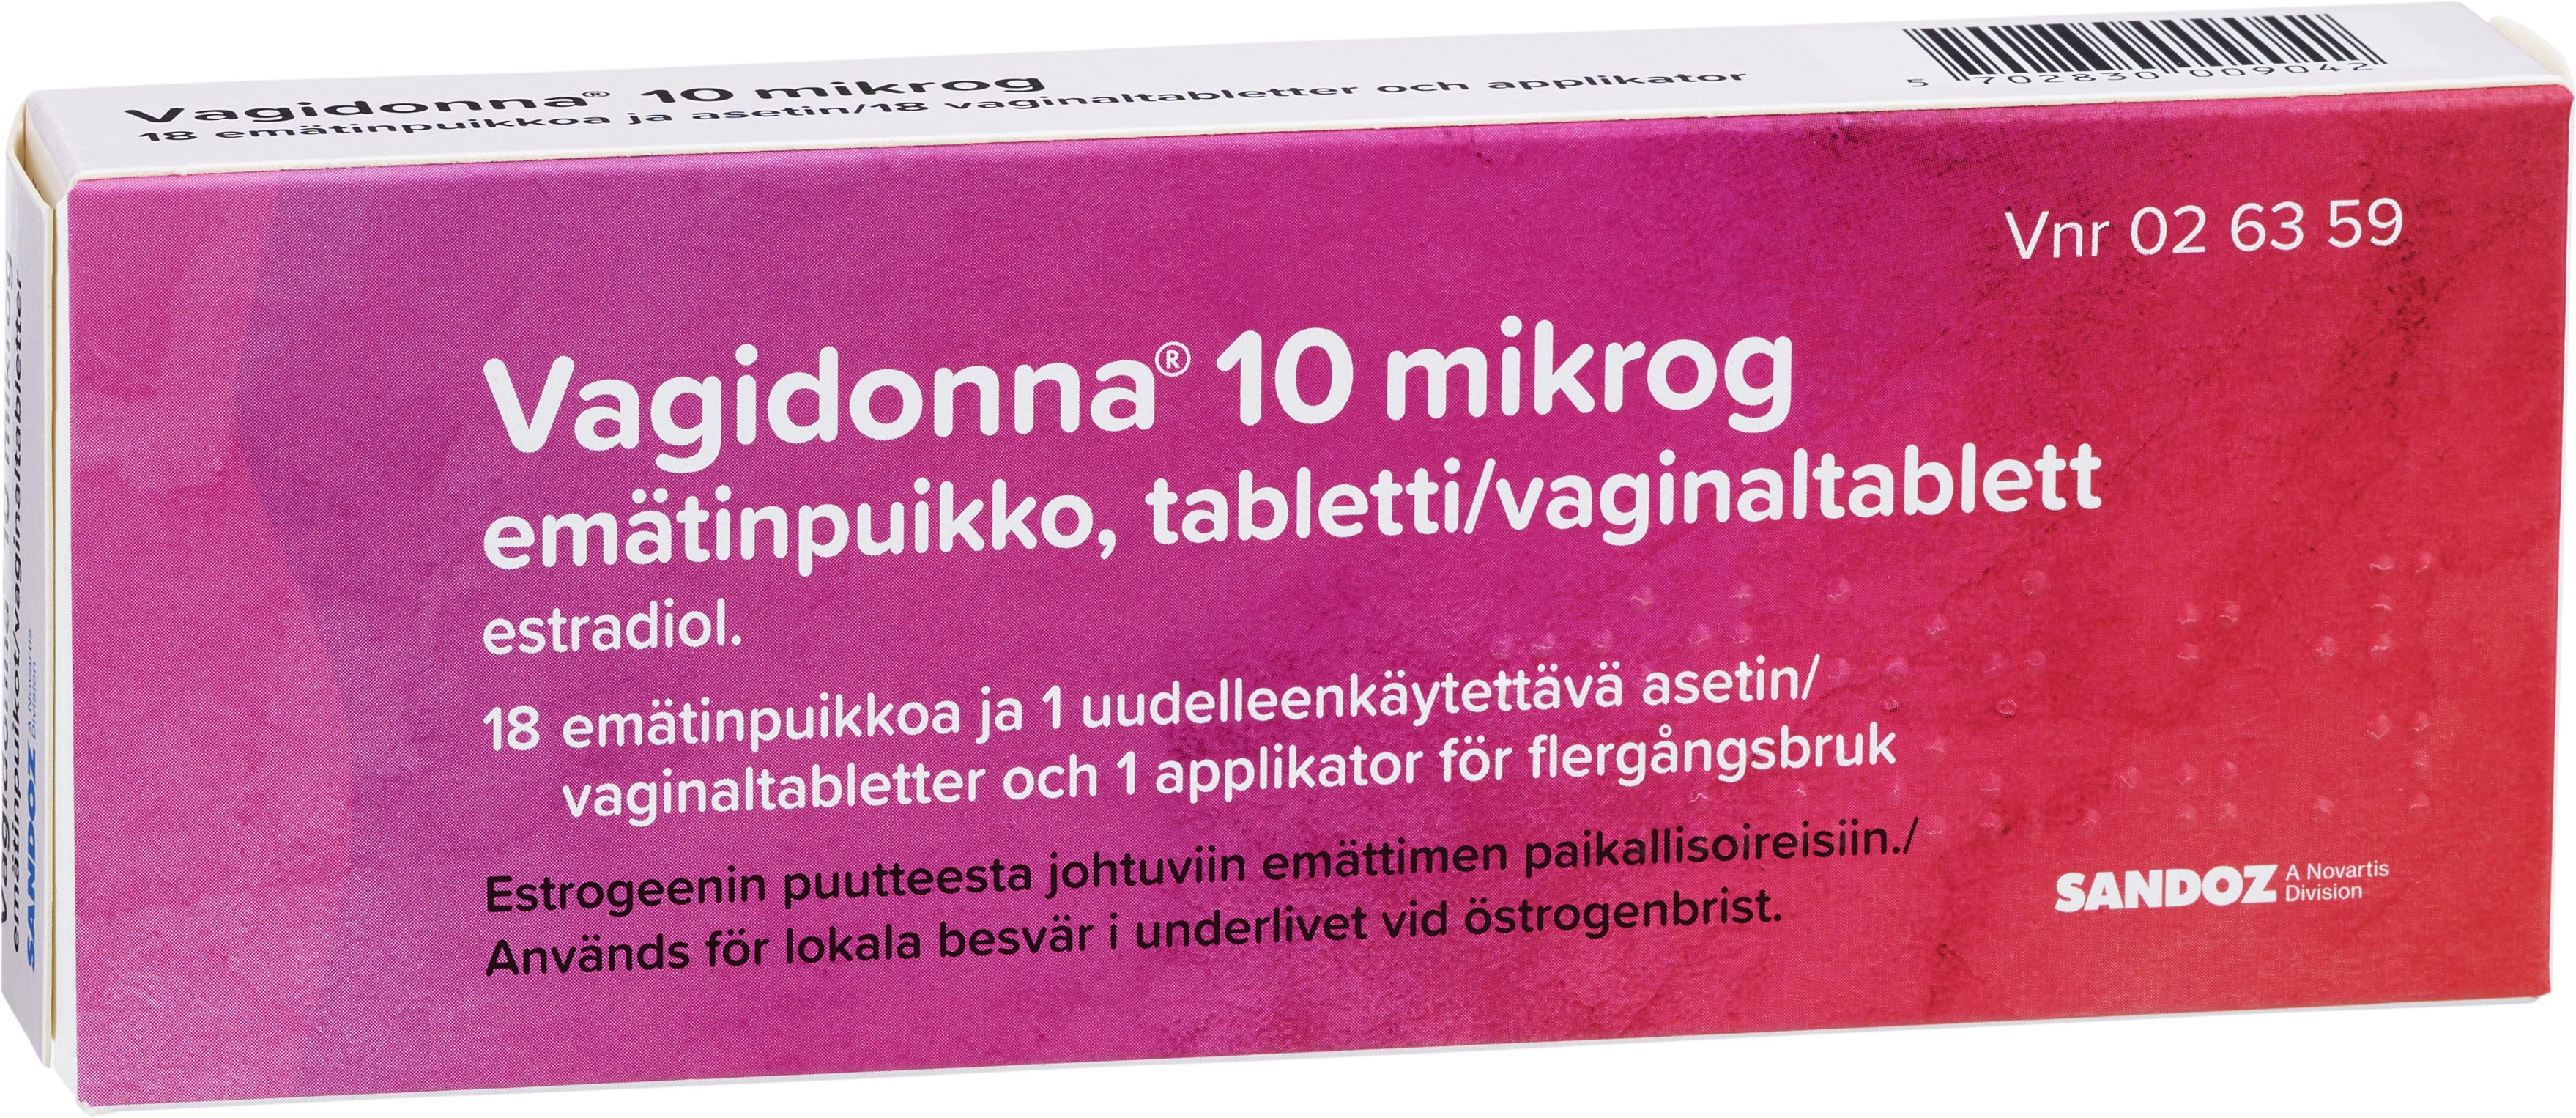 Vagidonna 10 mikrog Vaginaltablett 18 st